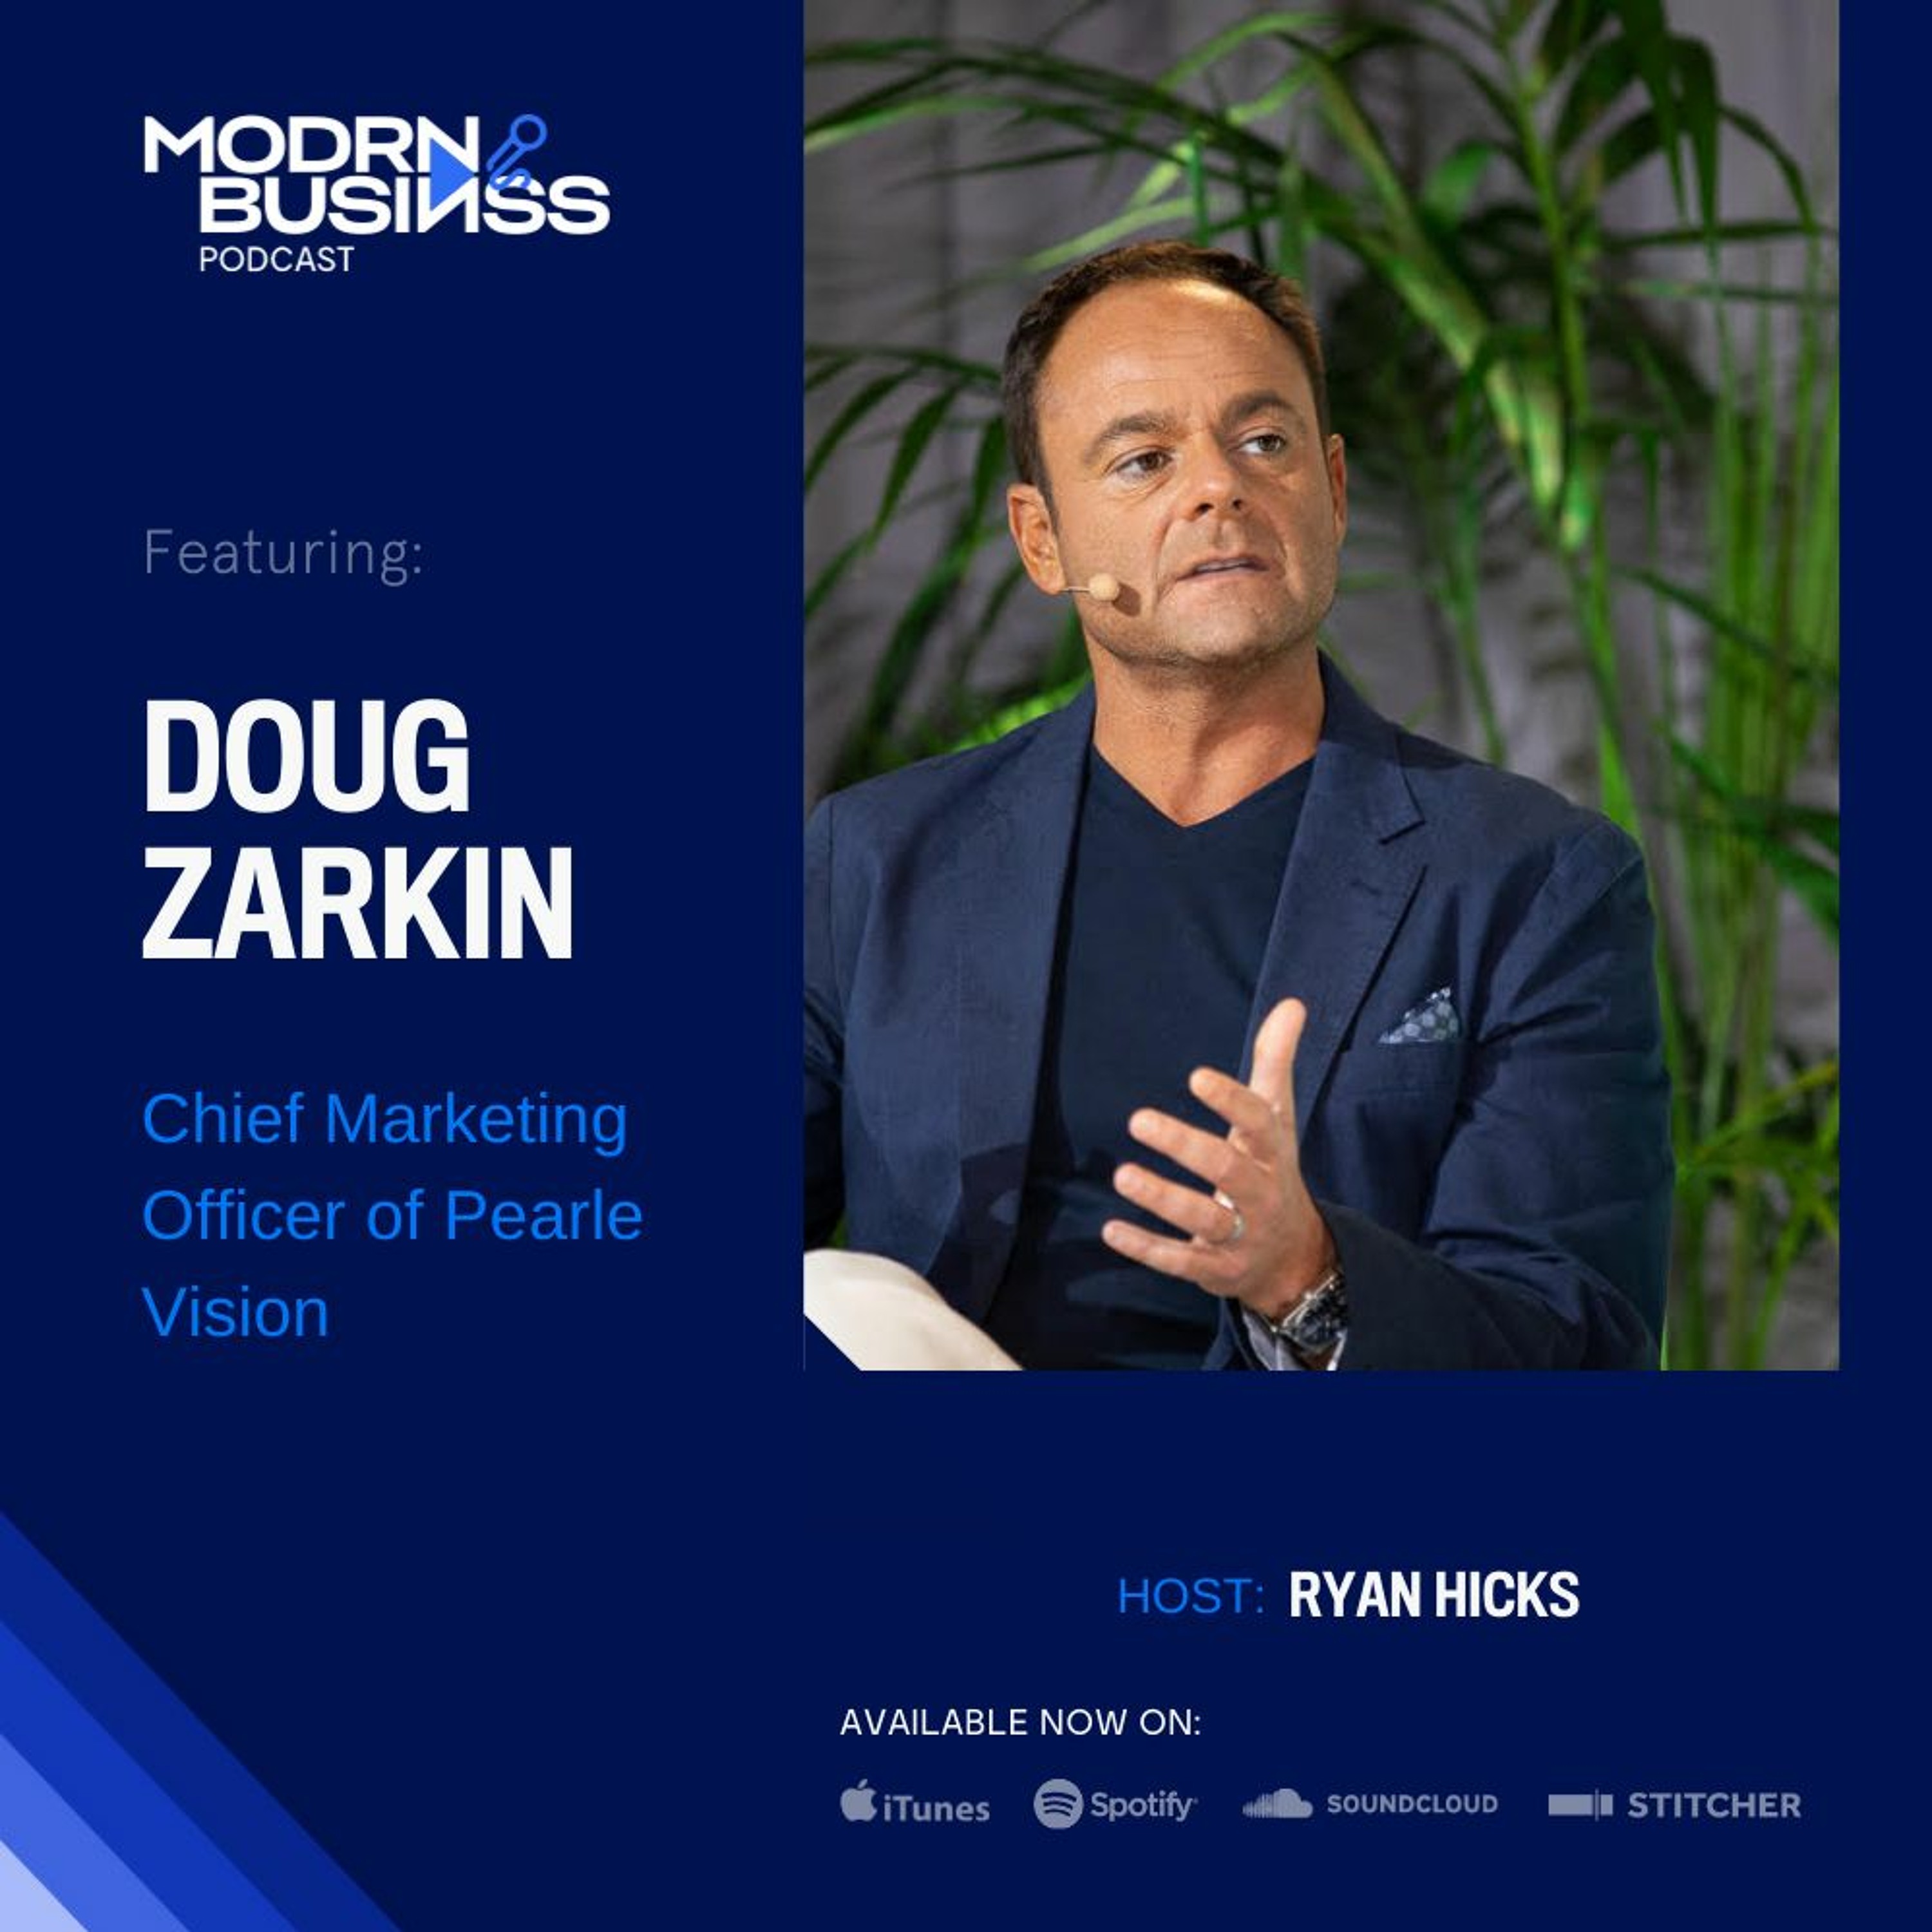 Doug Zarkin, CMO of Pearle Vision